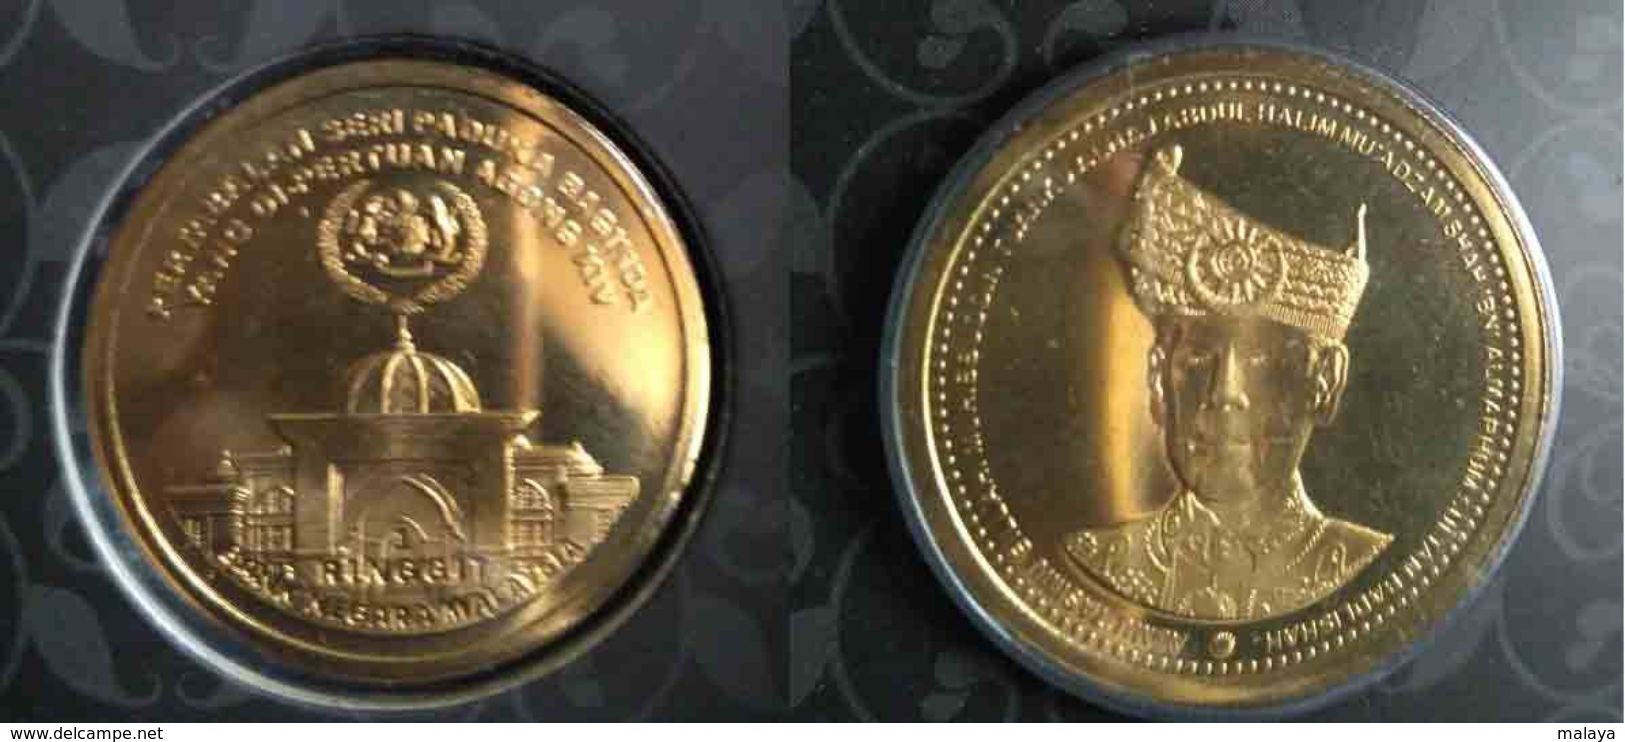 Malaysia 2012 1 Ringgit Coin Installation  Agong Sultan Kedah Nordic Gold (B.U) Commemorative Coin - Malaysia